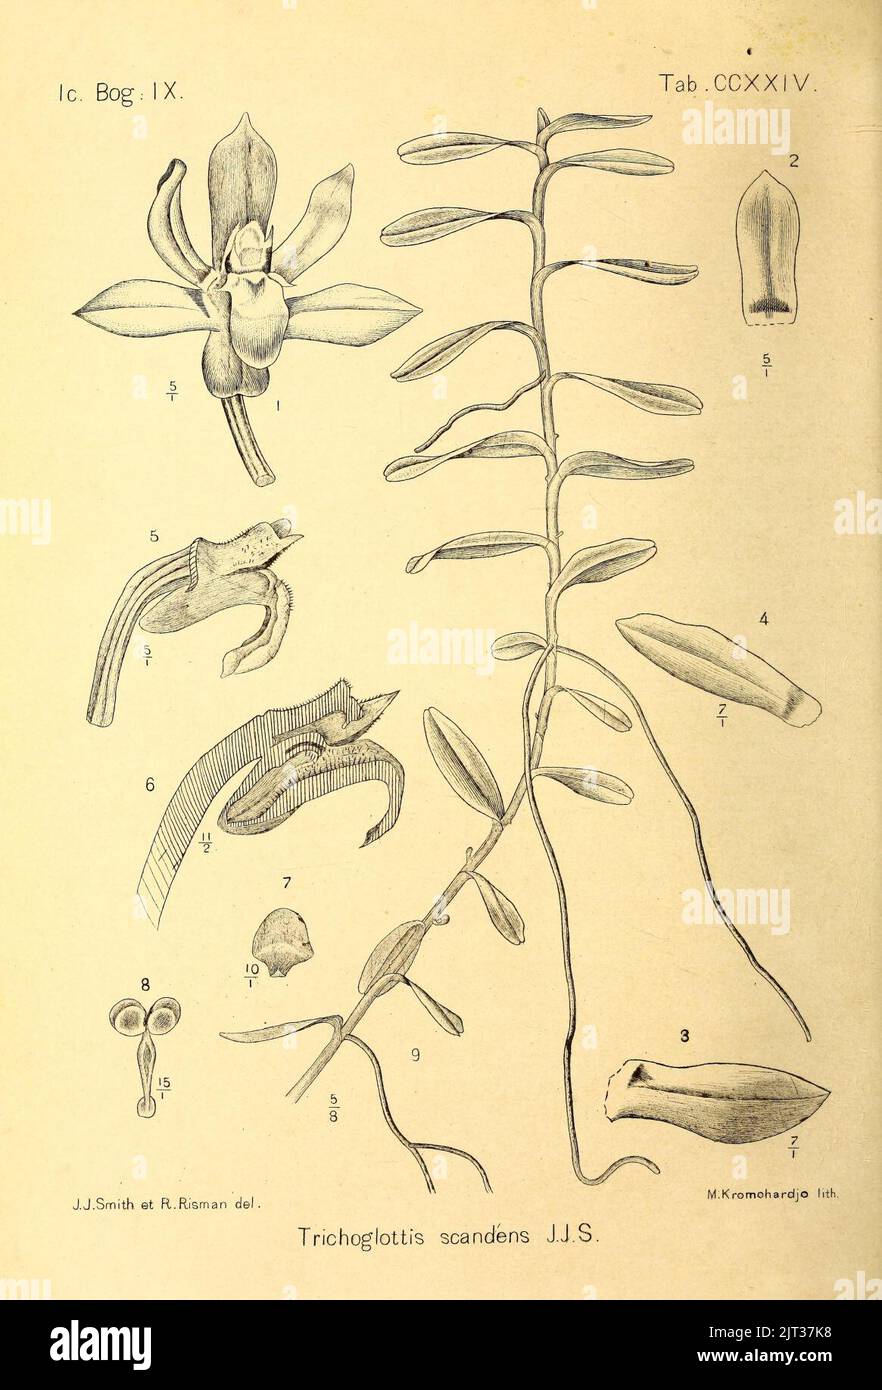 Trichoglottis scandens Icones Bogorienses V3 Tab CCXXIV (1906). Stock Photo